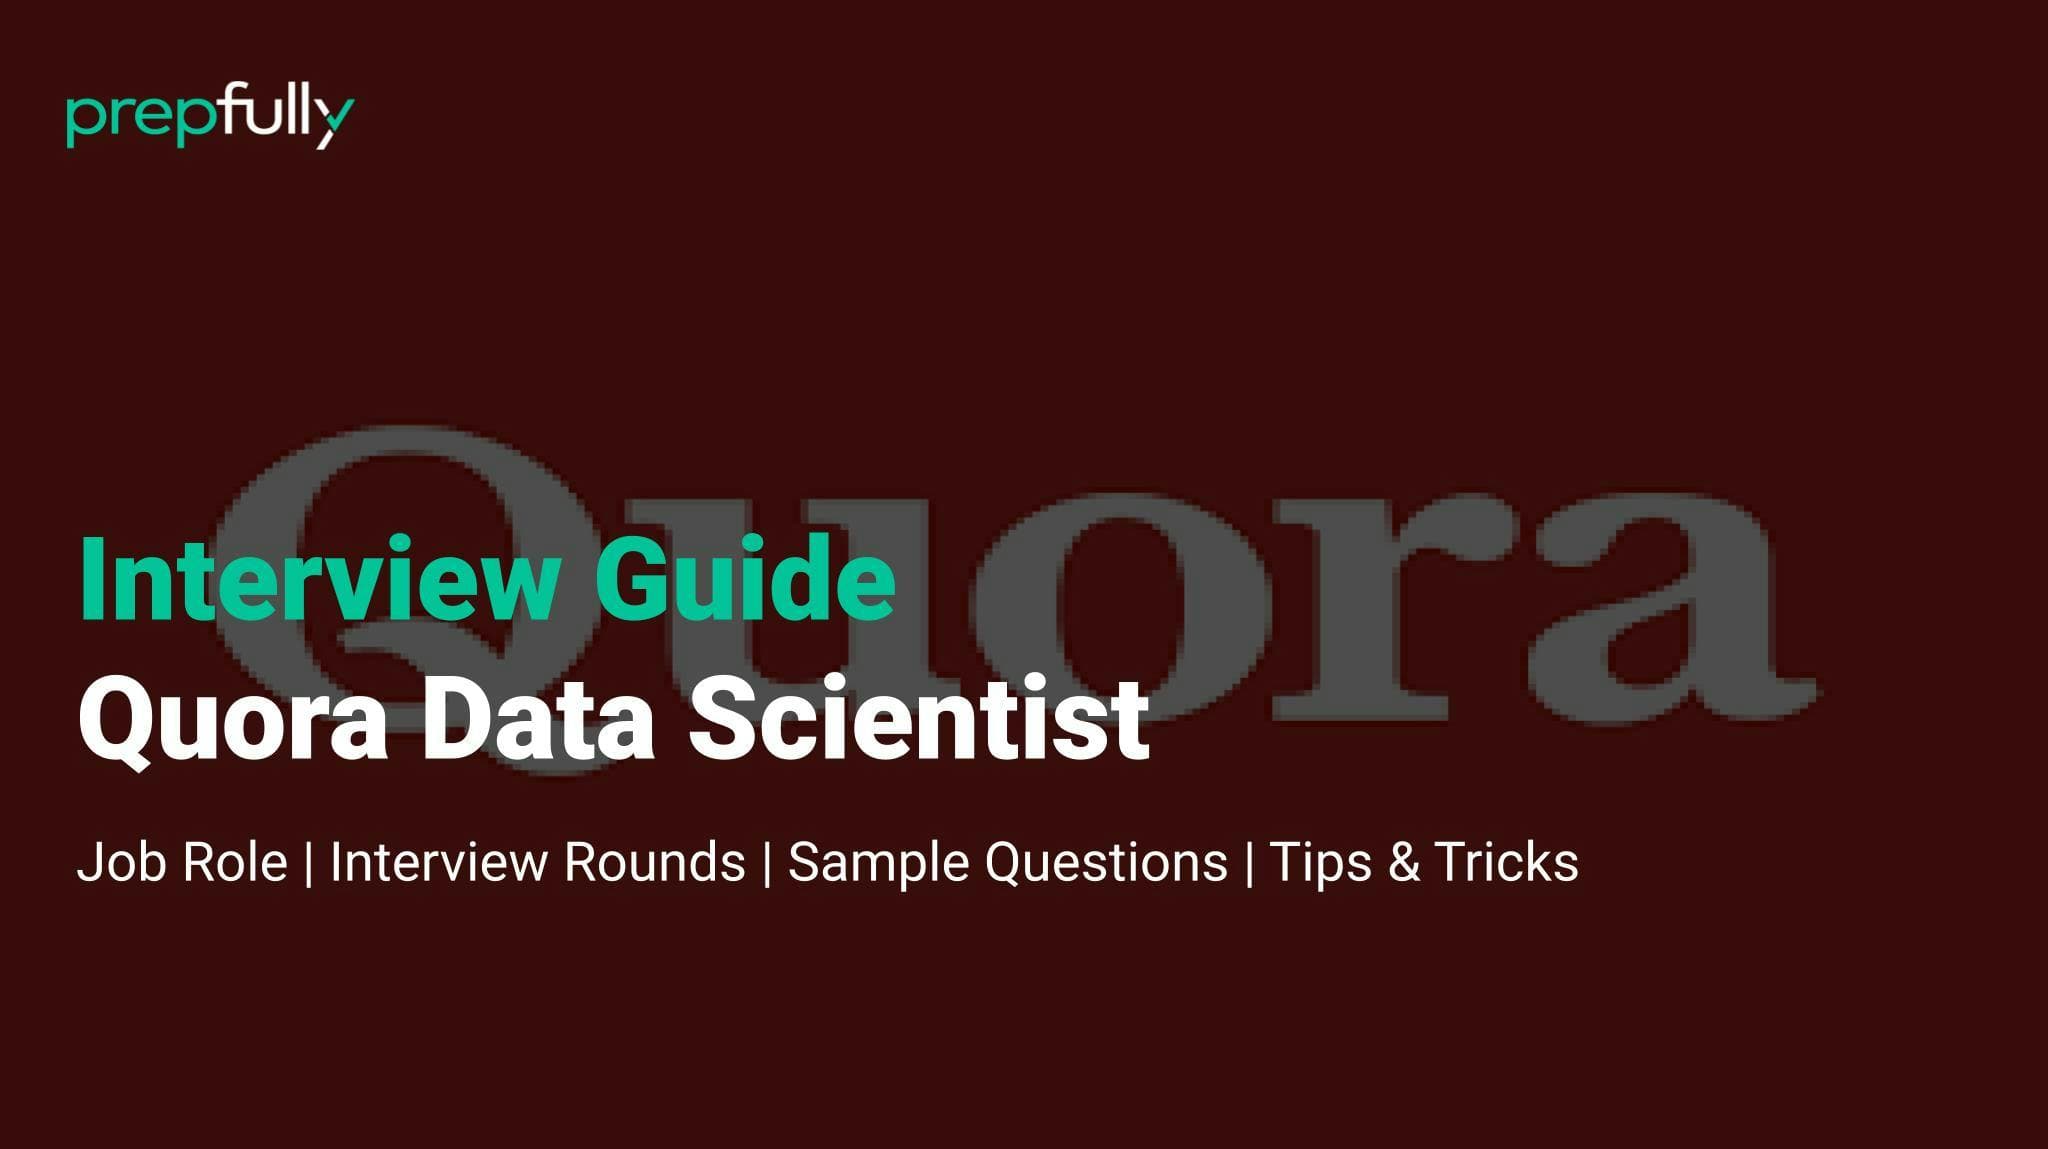 Quora data scientist interview guide